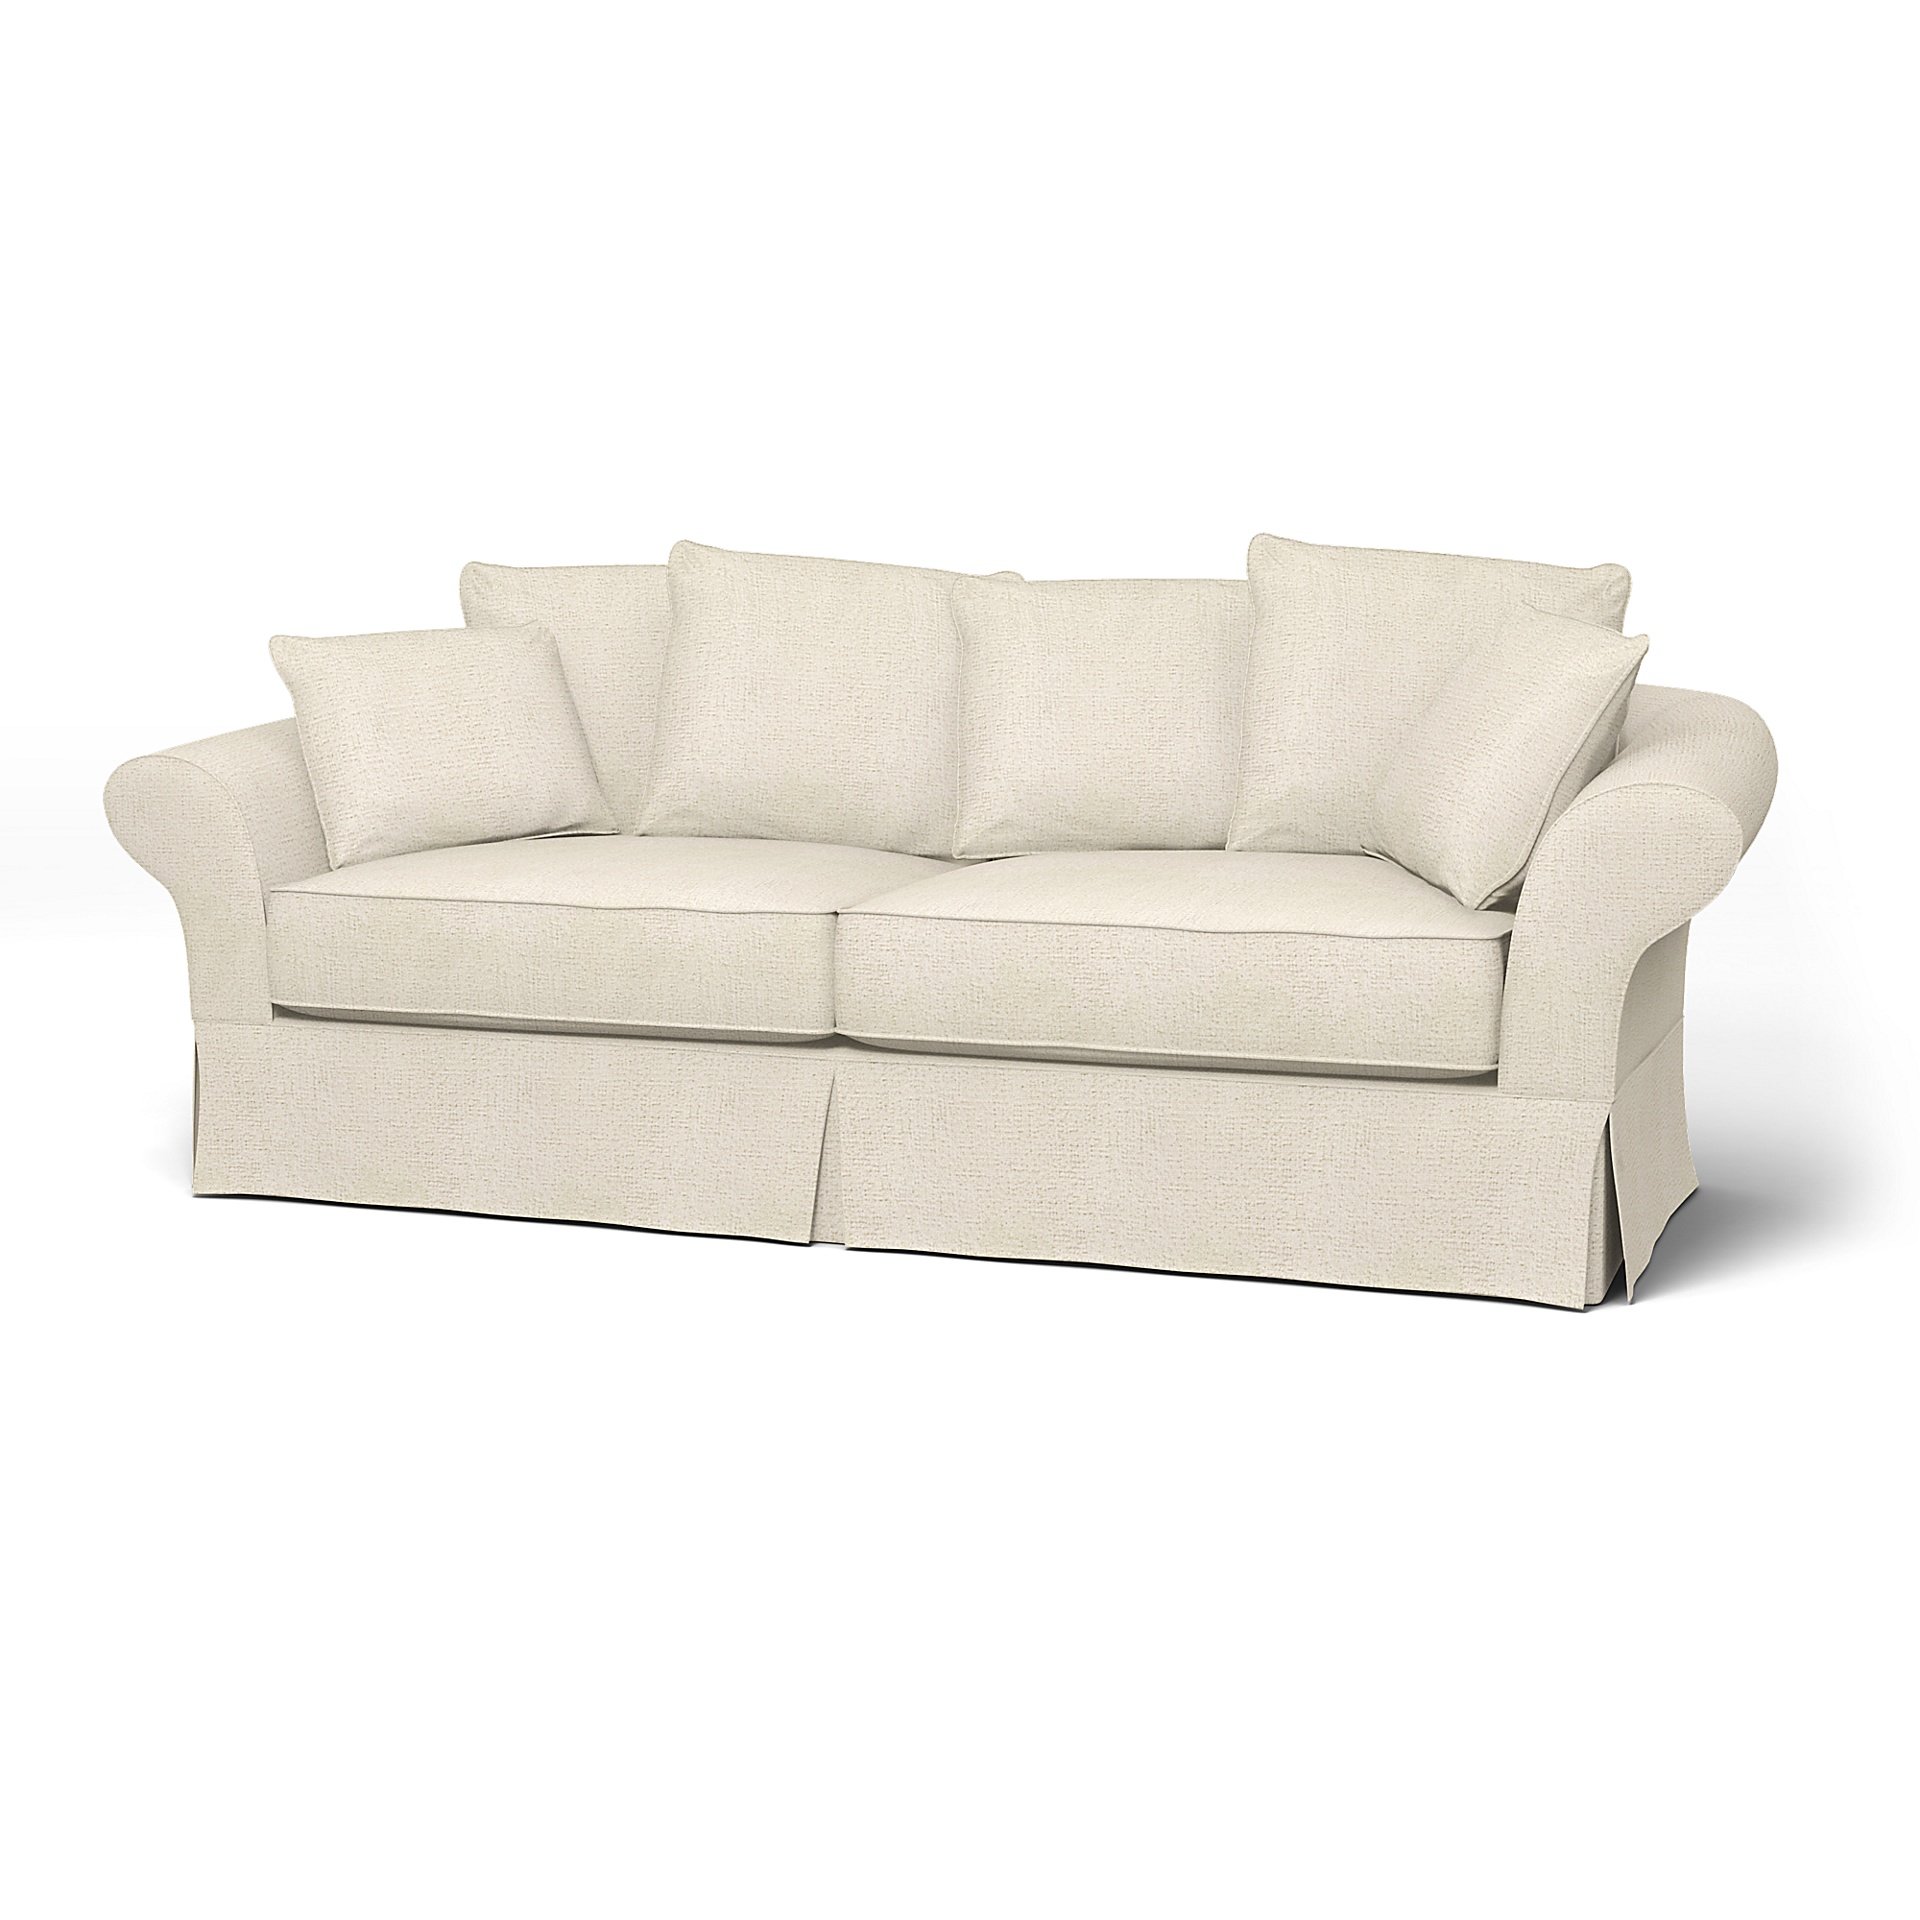 IKEA - Backamo 3 Seater Sofa Cover, Ecru, Boucle & Texture - Bemz